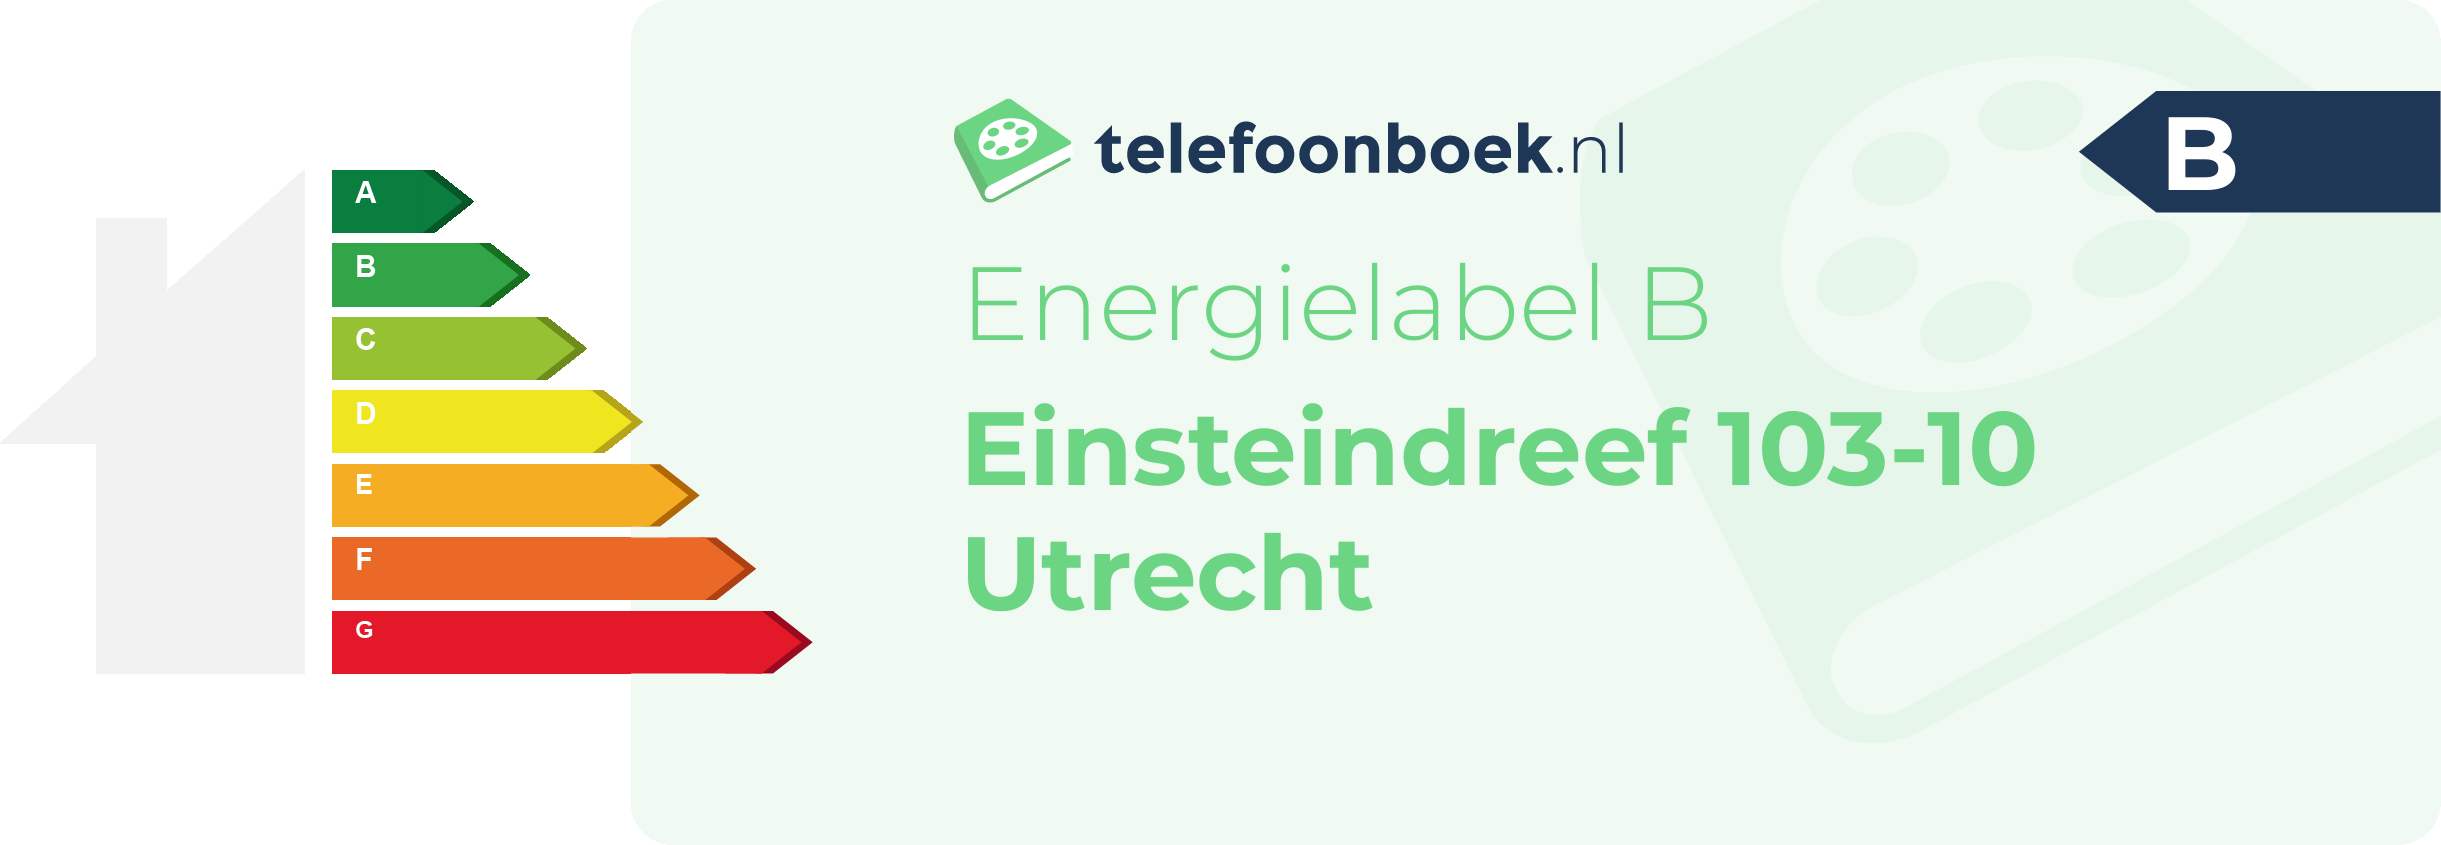 Energielabel Einsteindreef 103-10 Utrecht